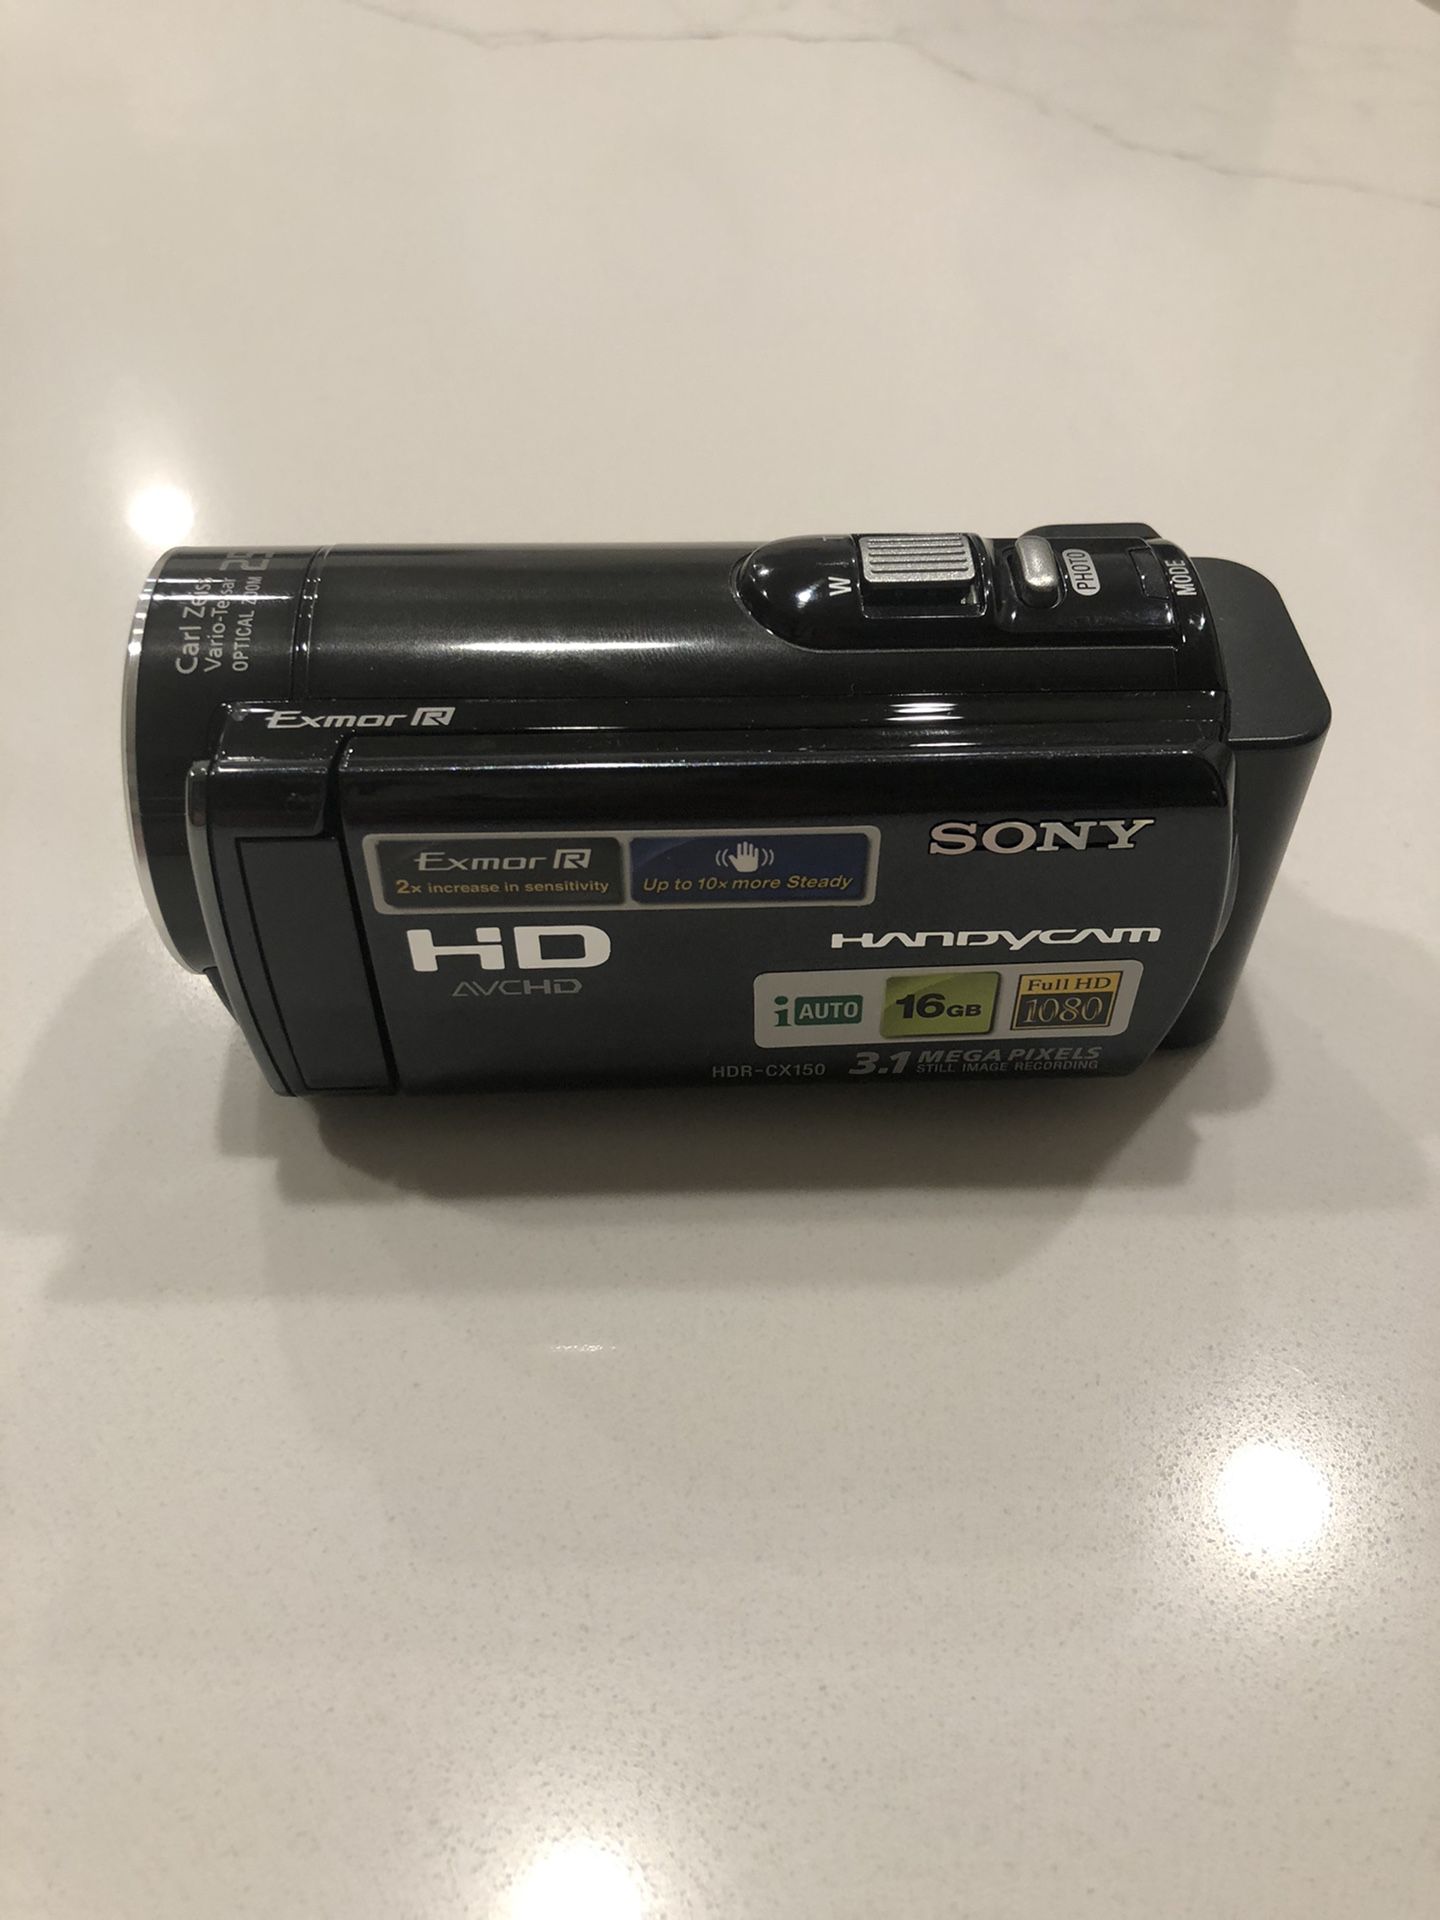 Sony video camera